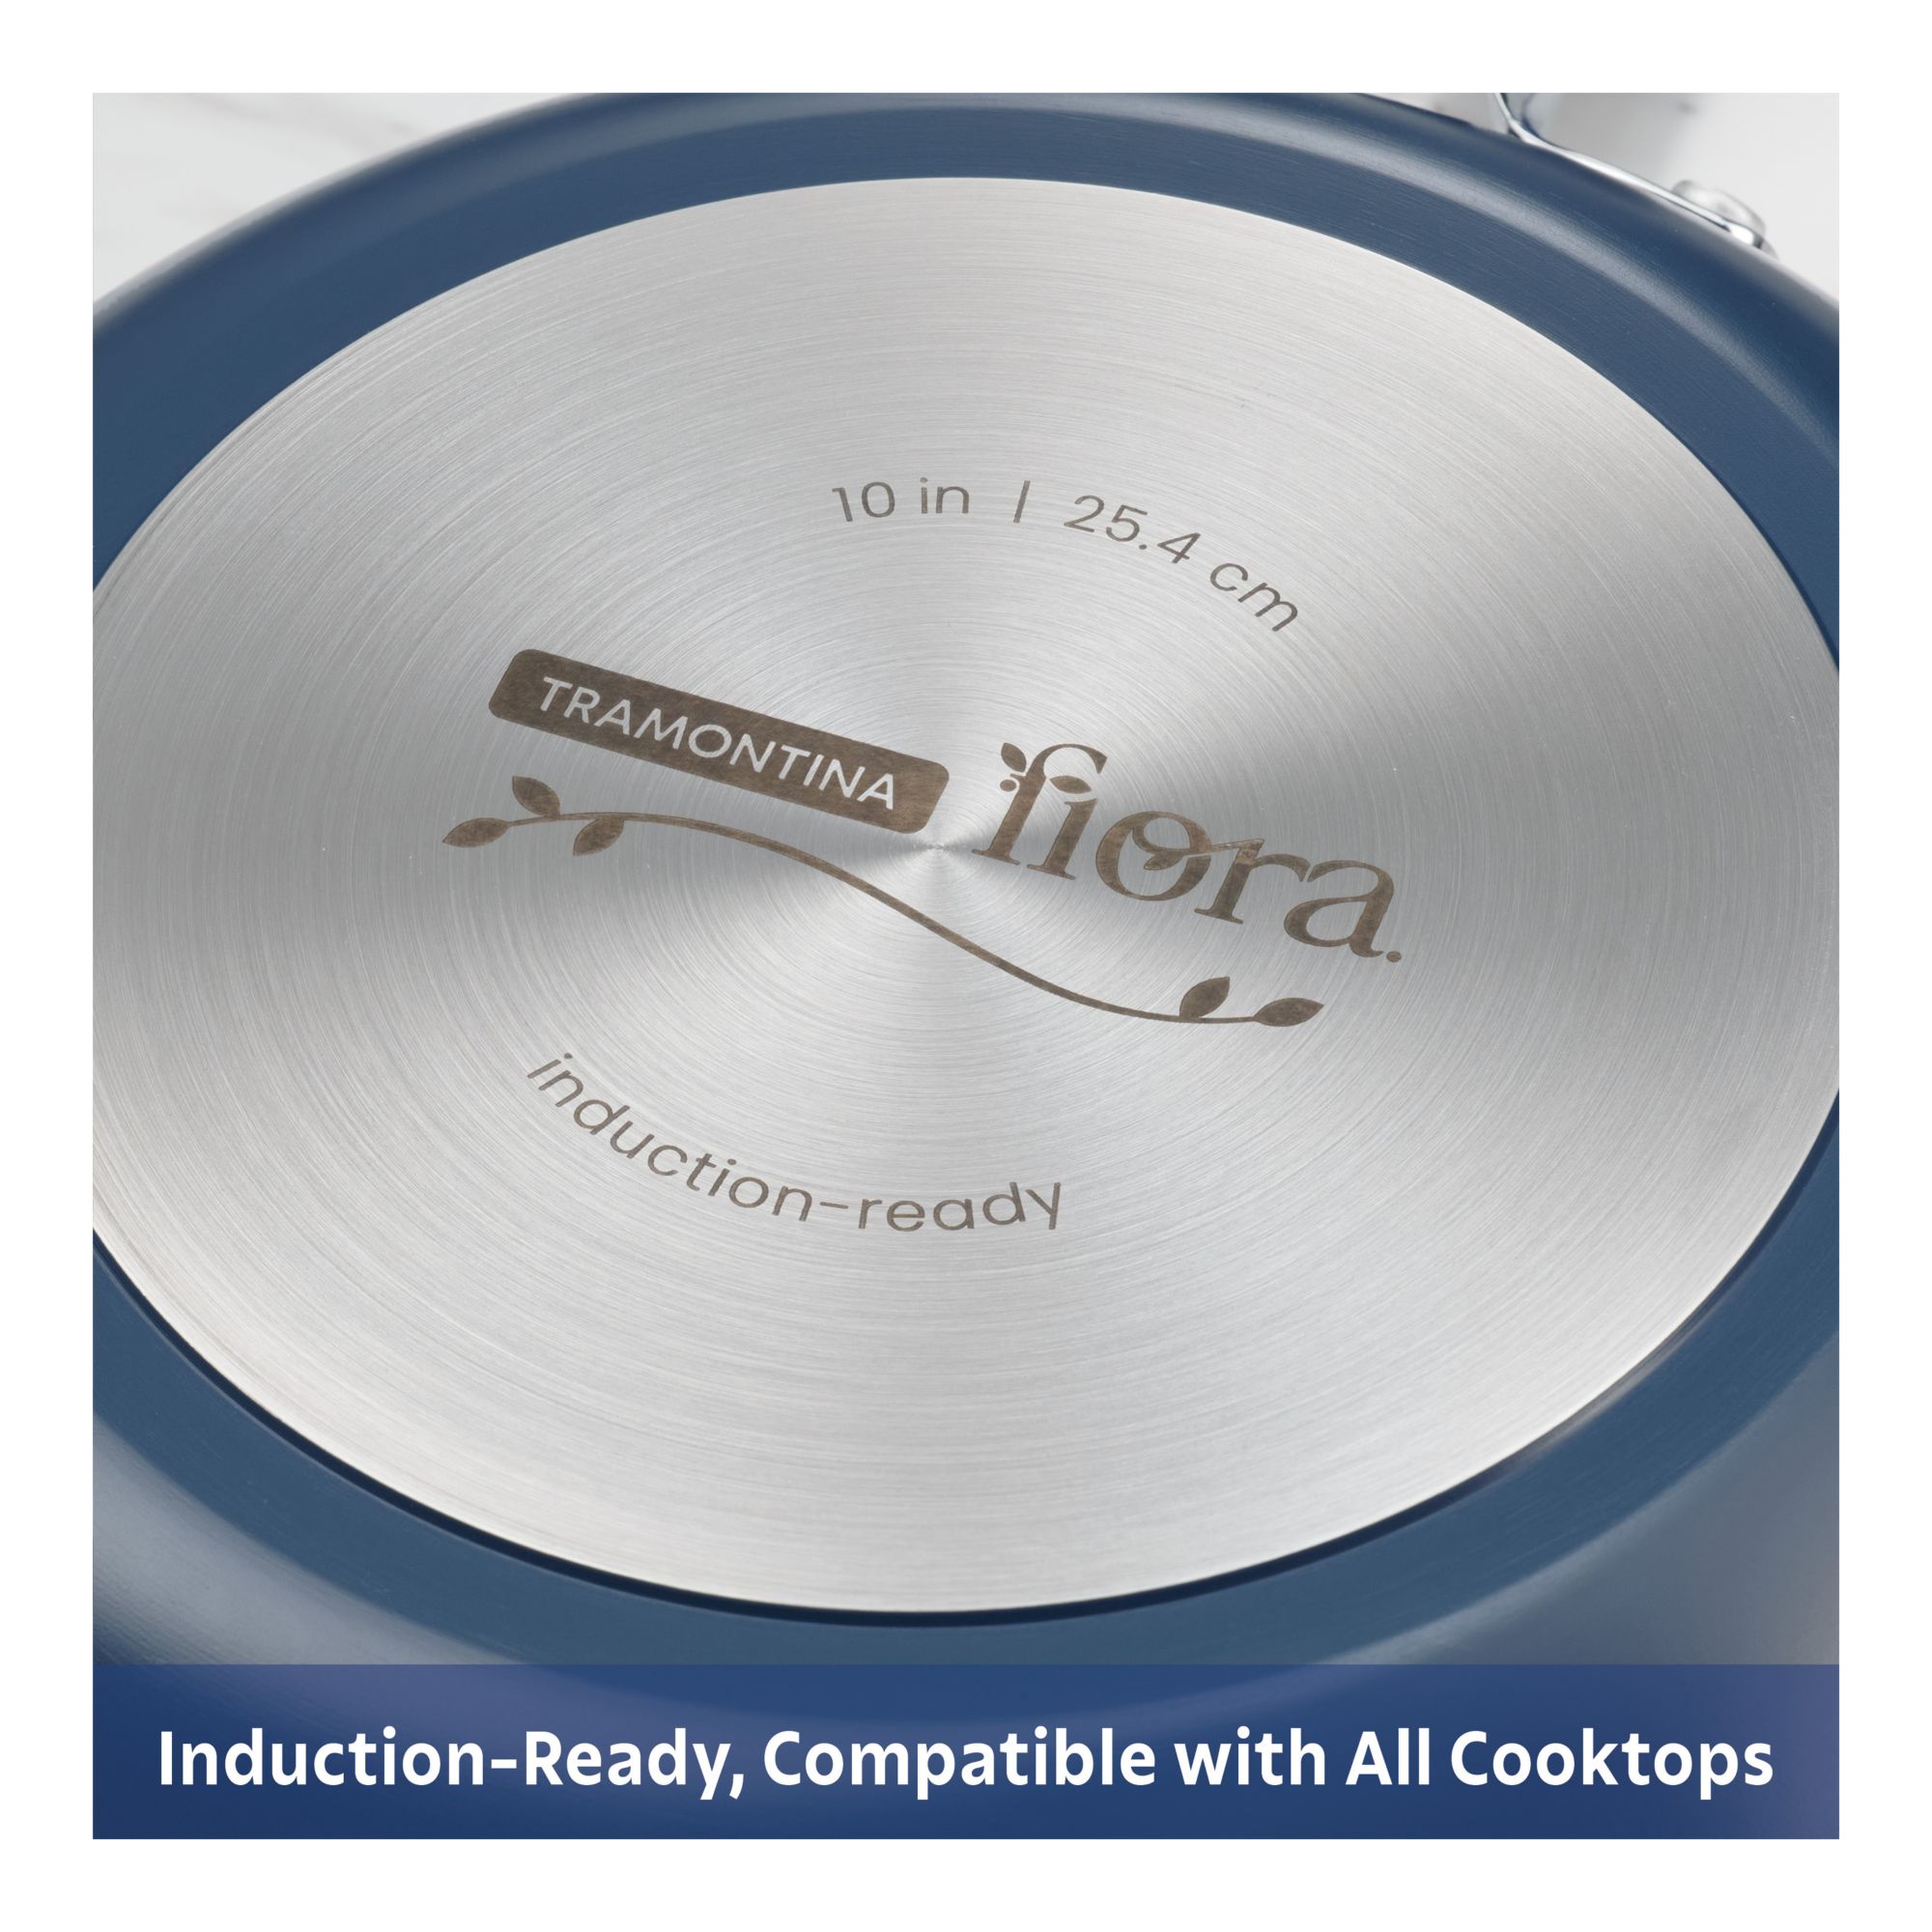 Tramontina Fiora 10 Pcs. Cold Forged Ceramic Nonstick Cookware Set